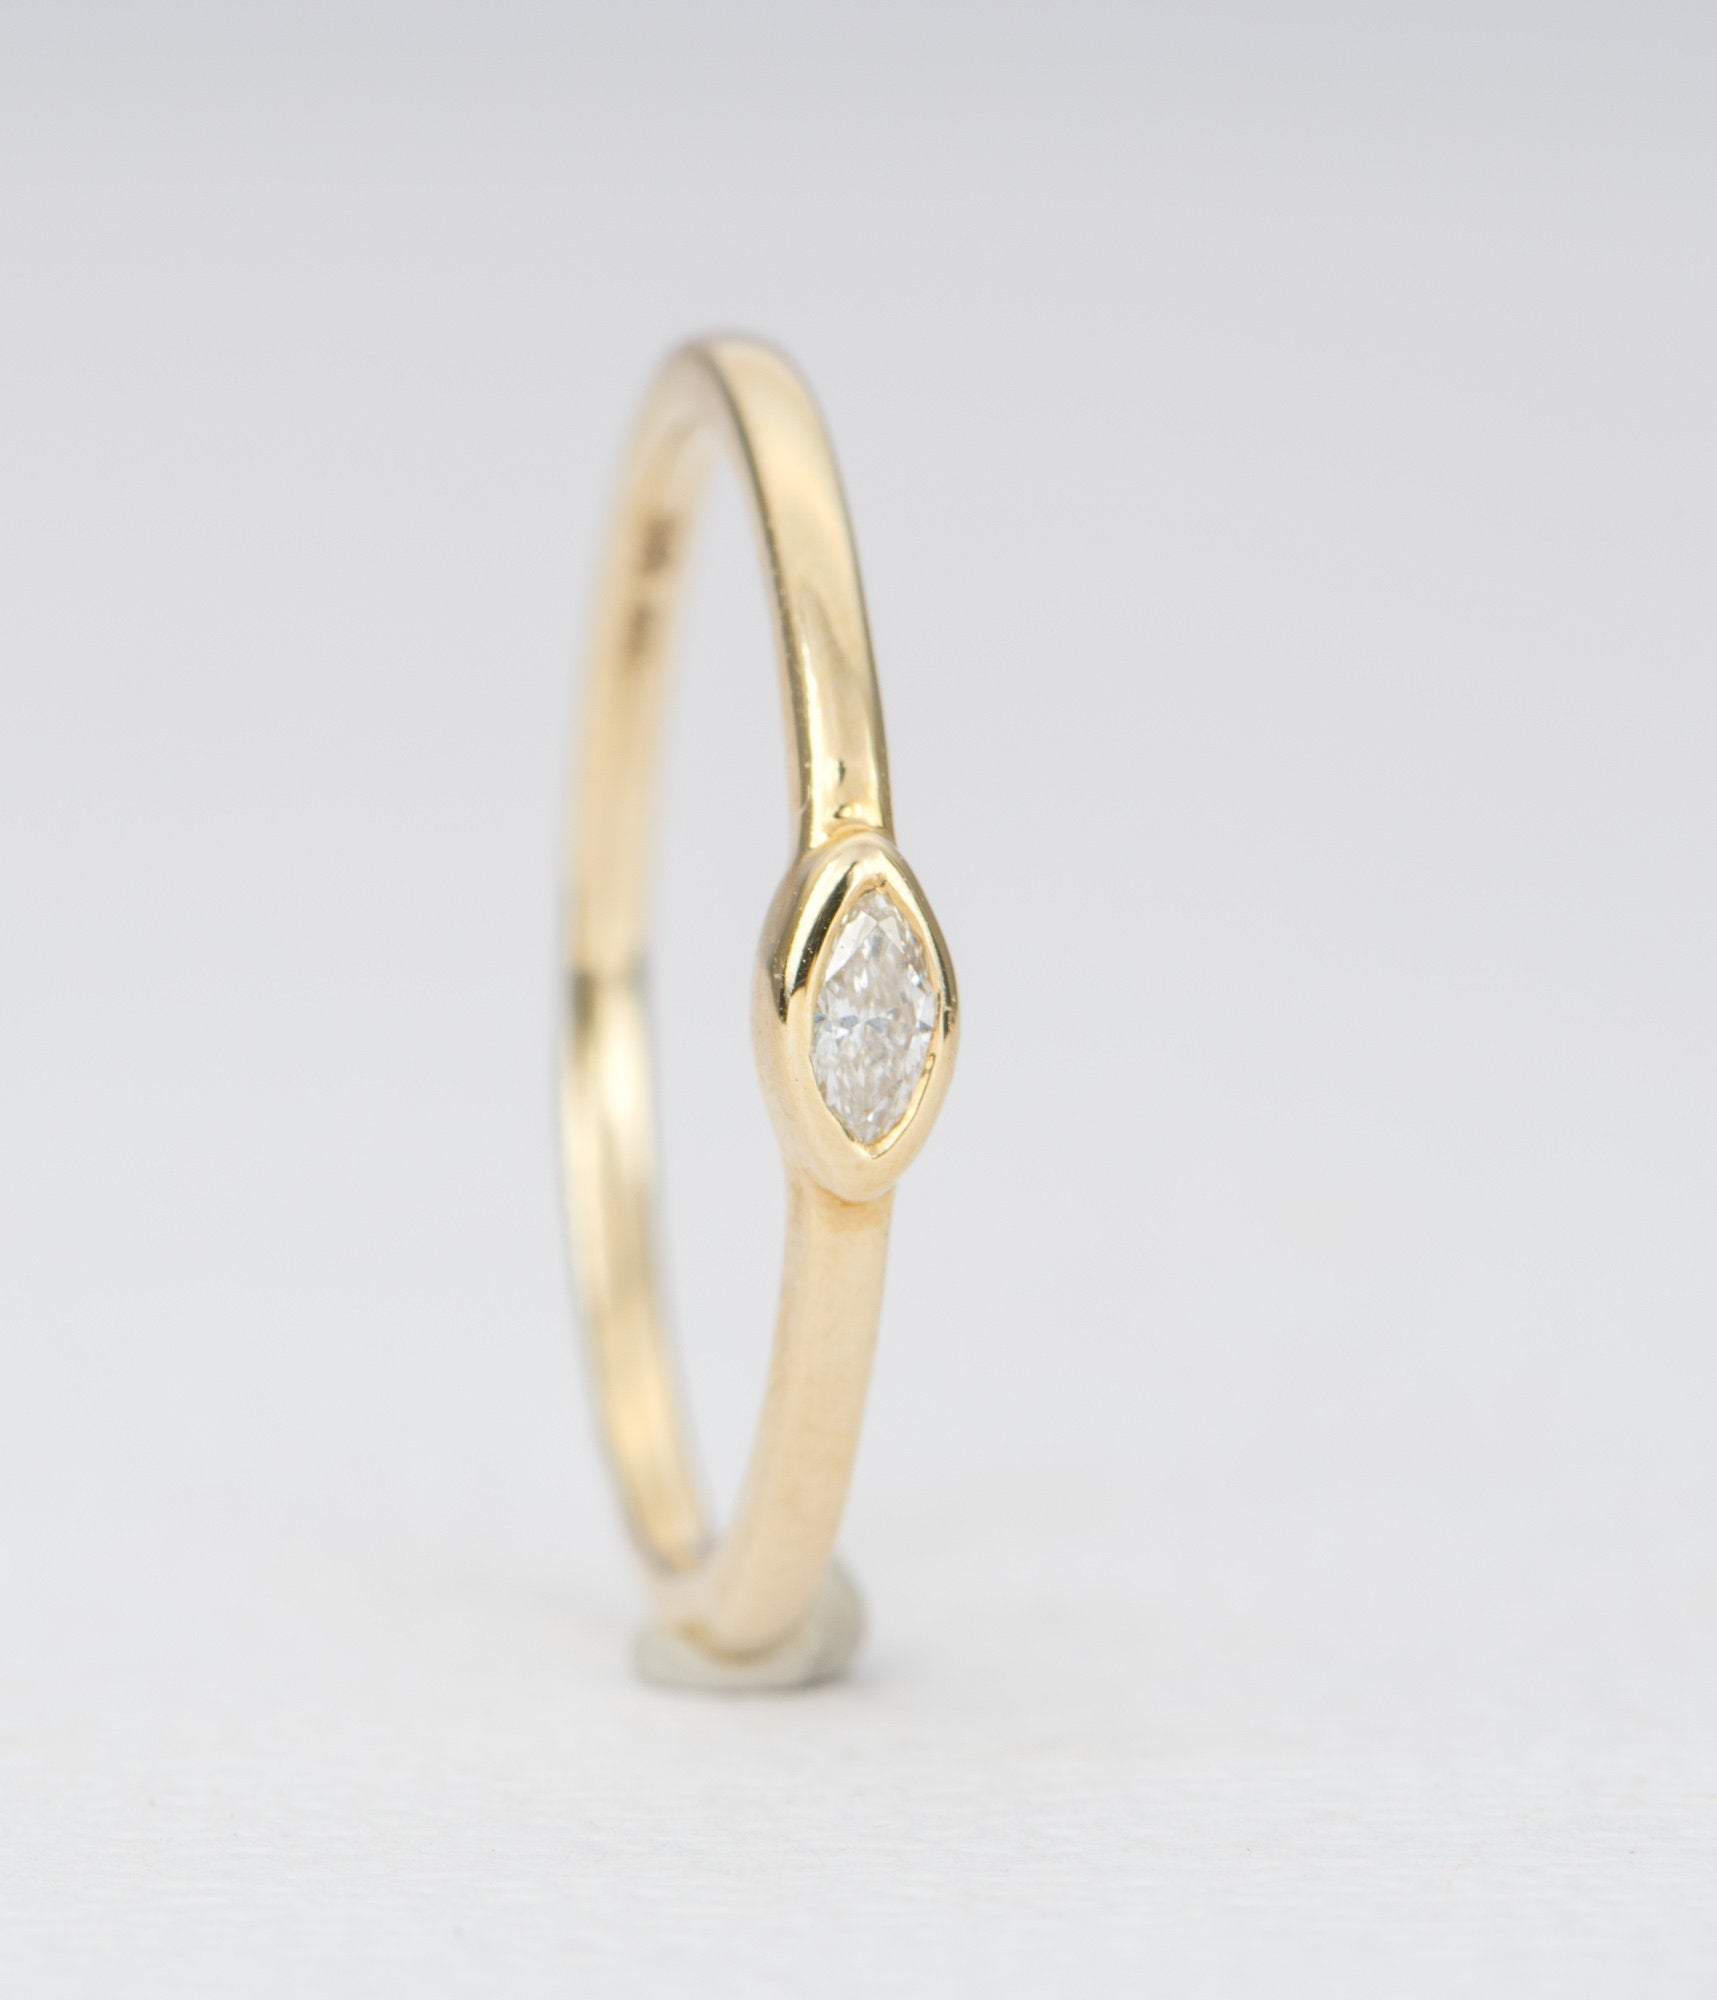 Lightweight gold rings||Elegant dailywaear gold rings design - YouTube